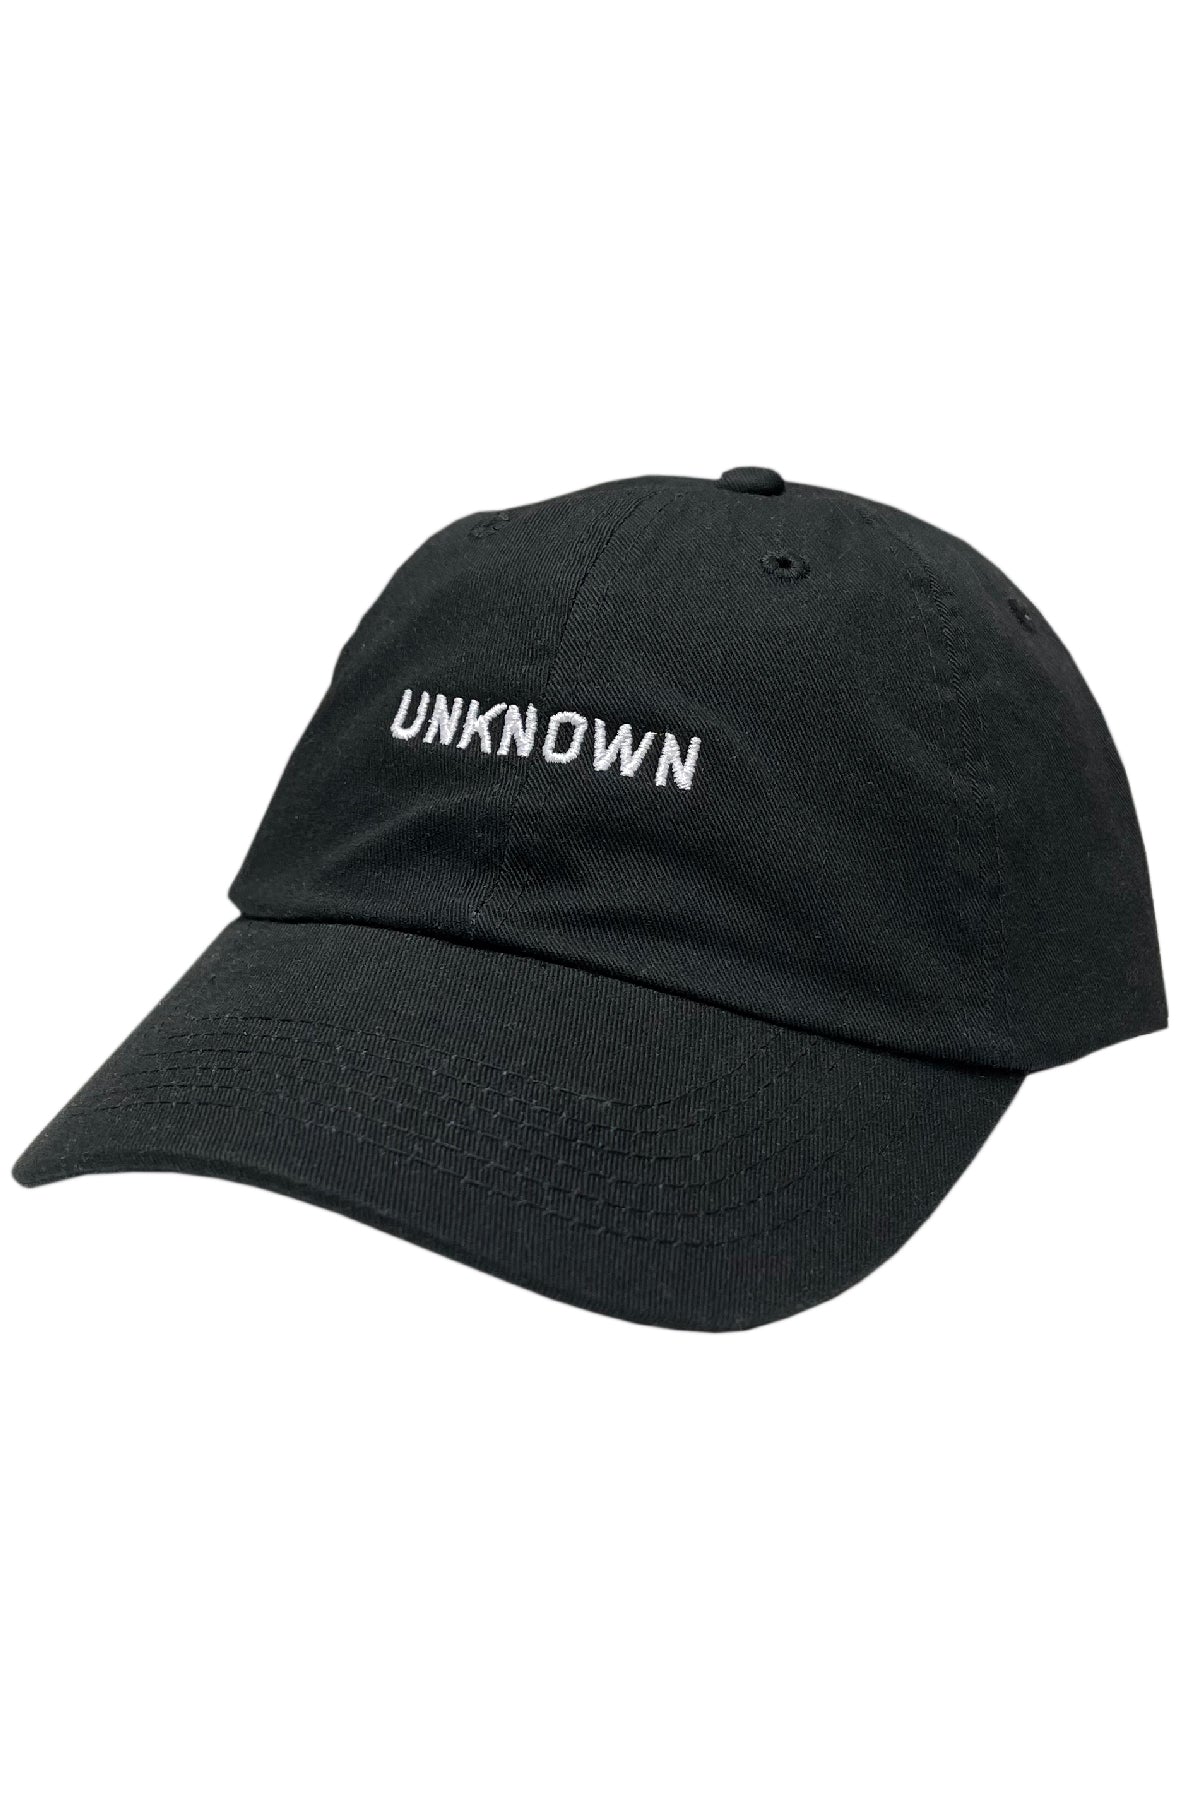 Anenberg, Unknown Classic Black Dad Hat